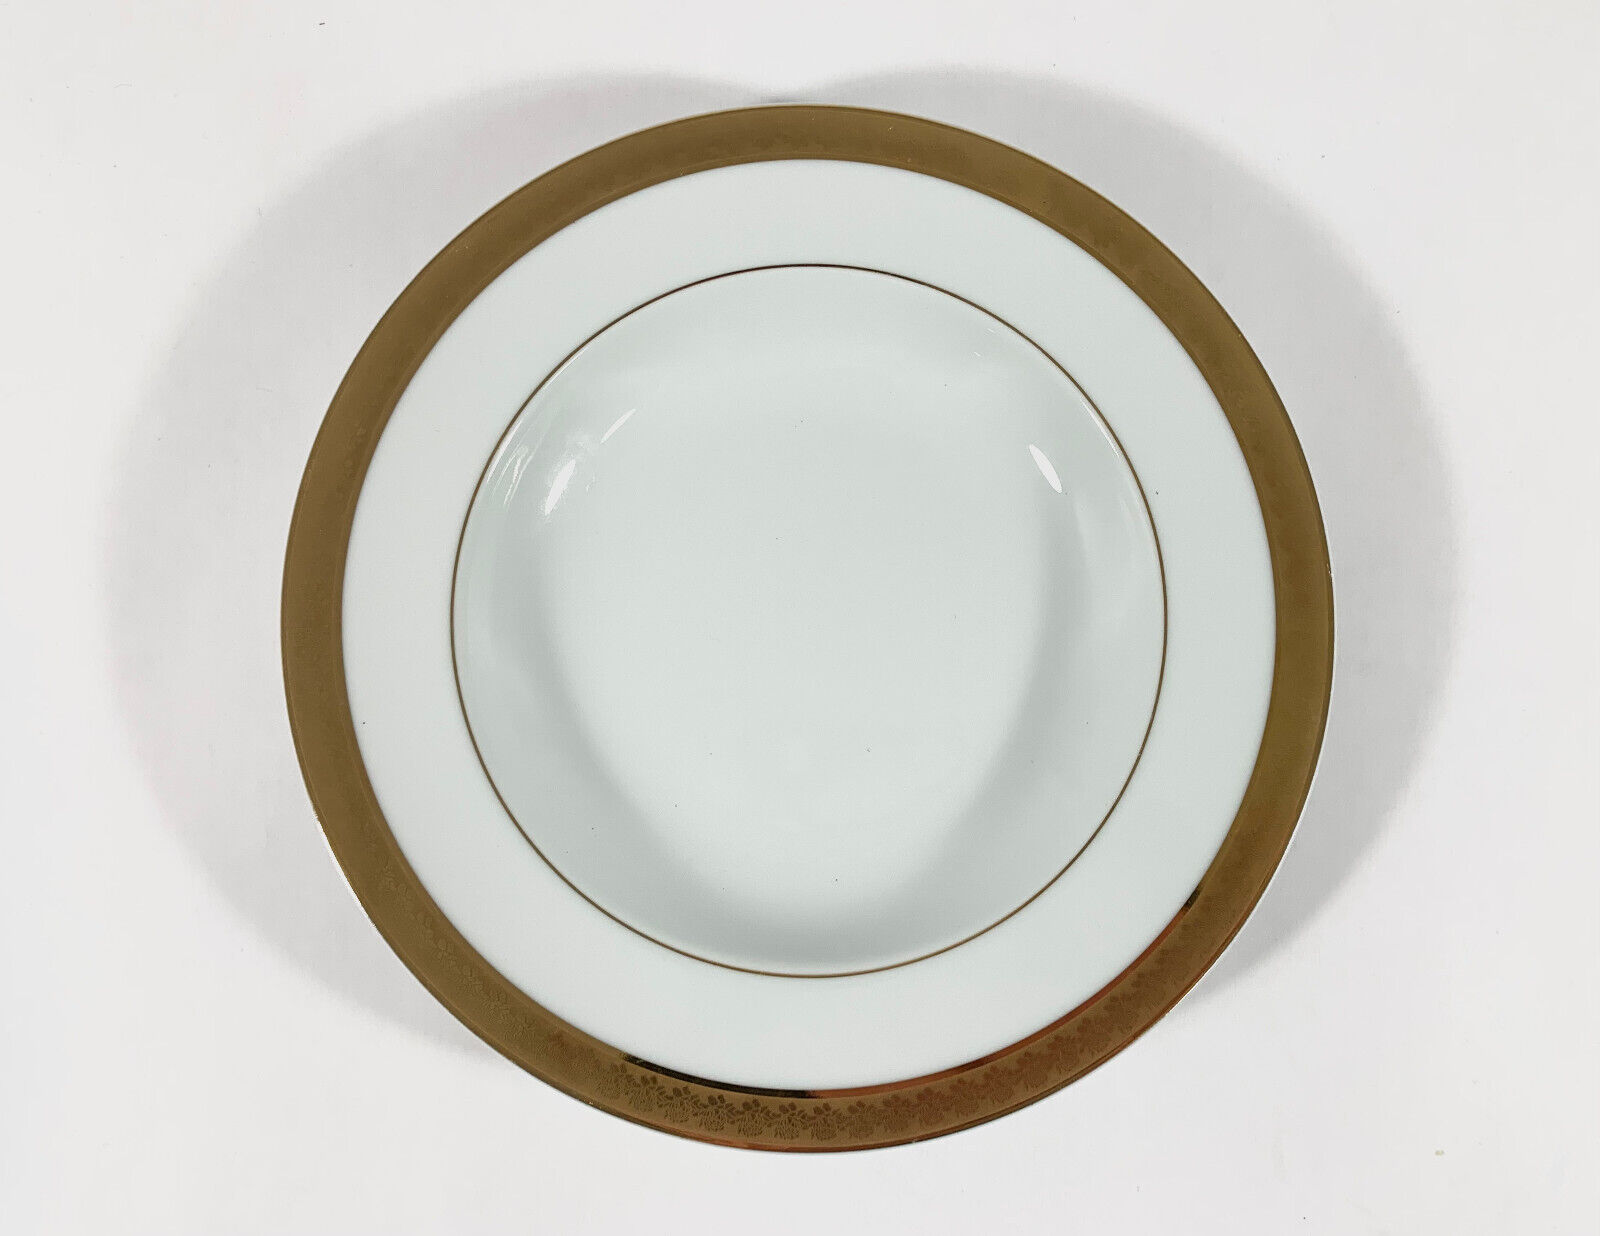 4x Bernardaud Rhapsody Limoge Gold Rim Deep Plates Soup Pasta Bowls Plates 22 cm